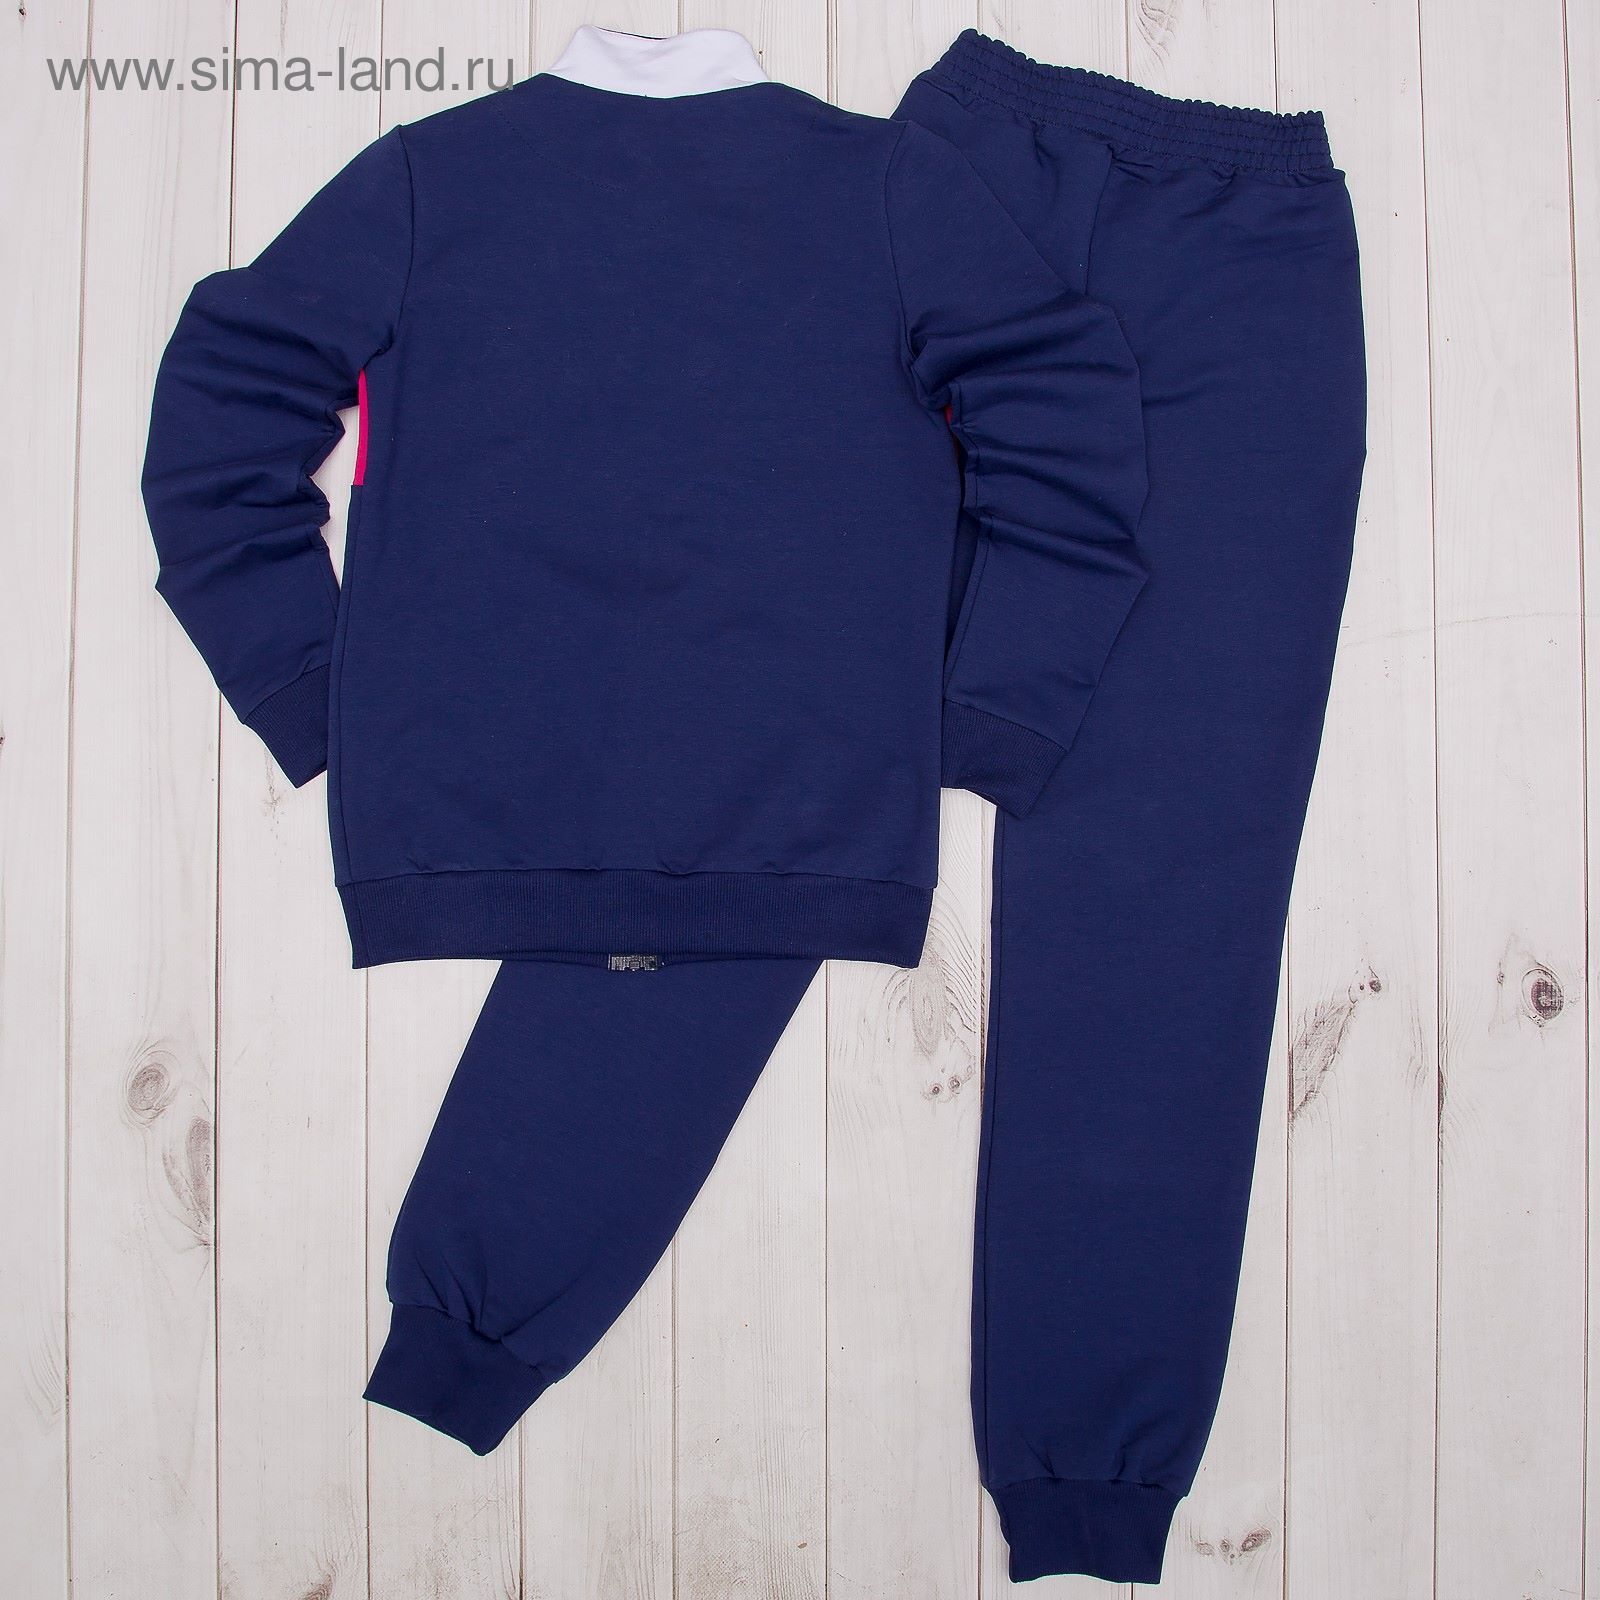 Комплект для девочки (куртка+брюки), рост 146 см, цвет тёмно-синий /цвет фуксия Л692